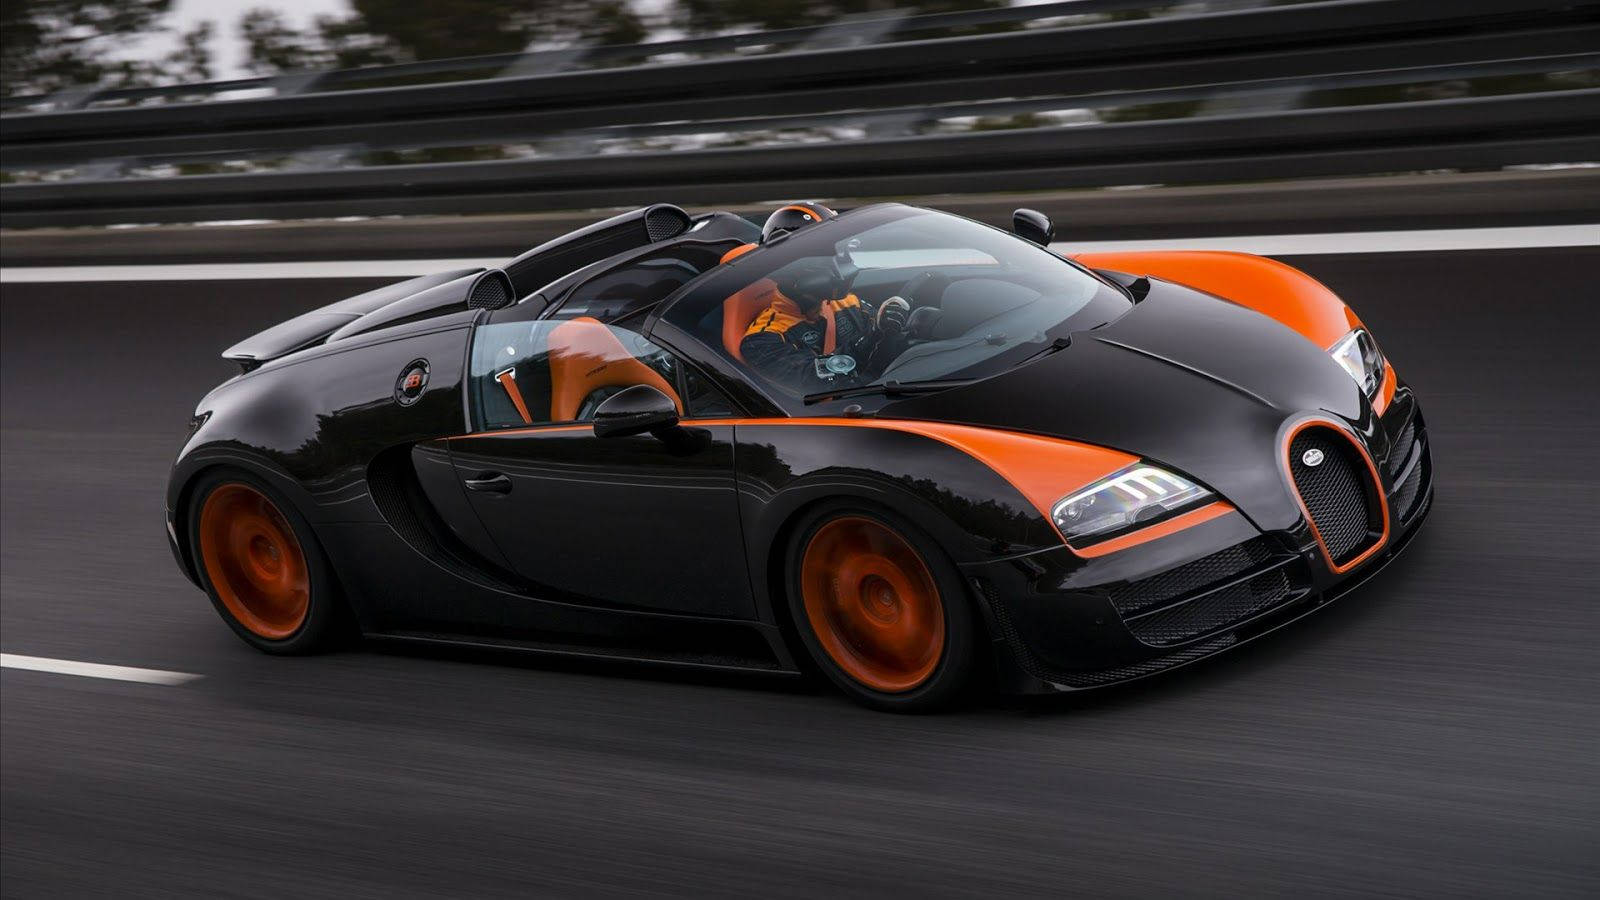 Fast-moving Bugatti Veyron Supercar